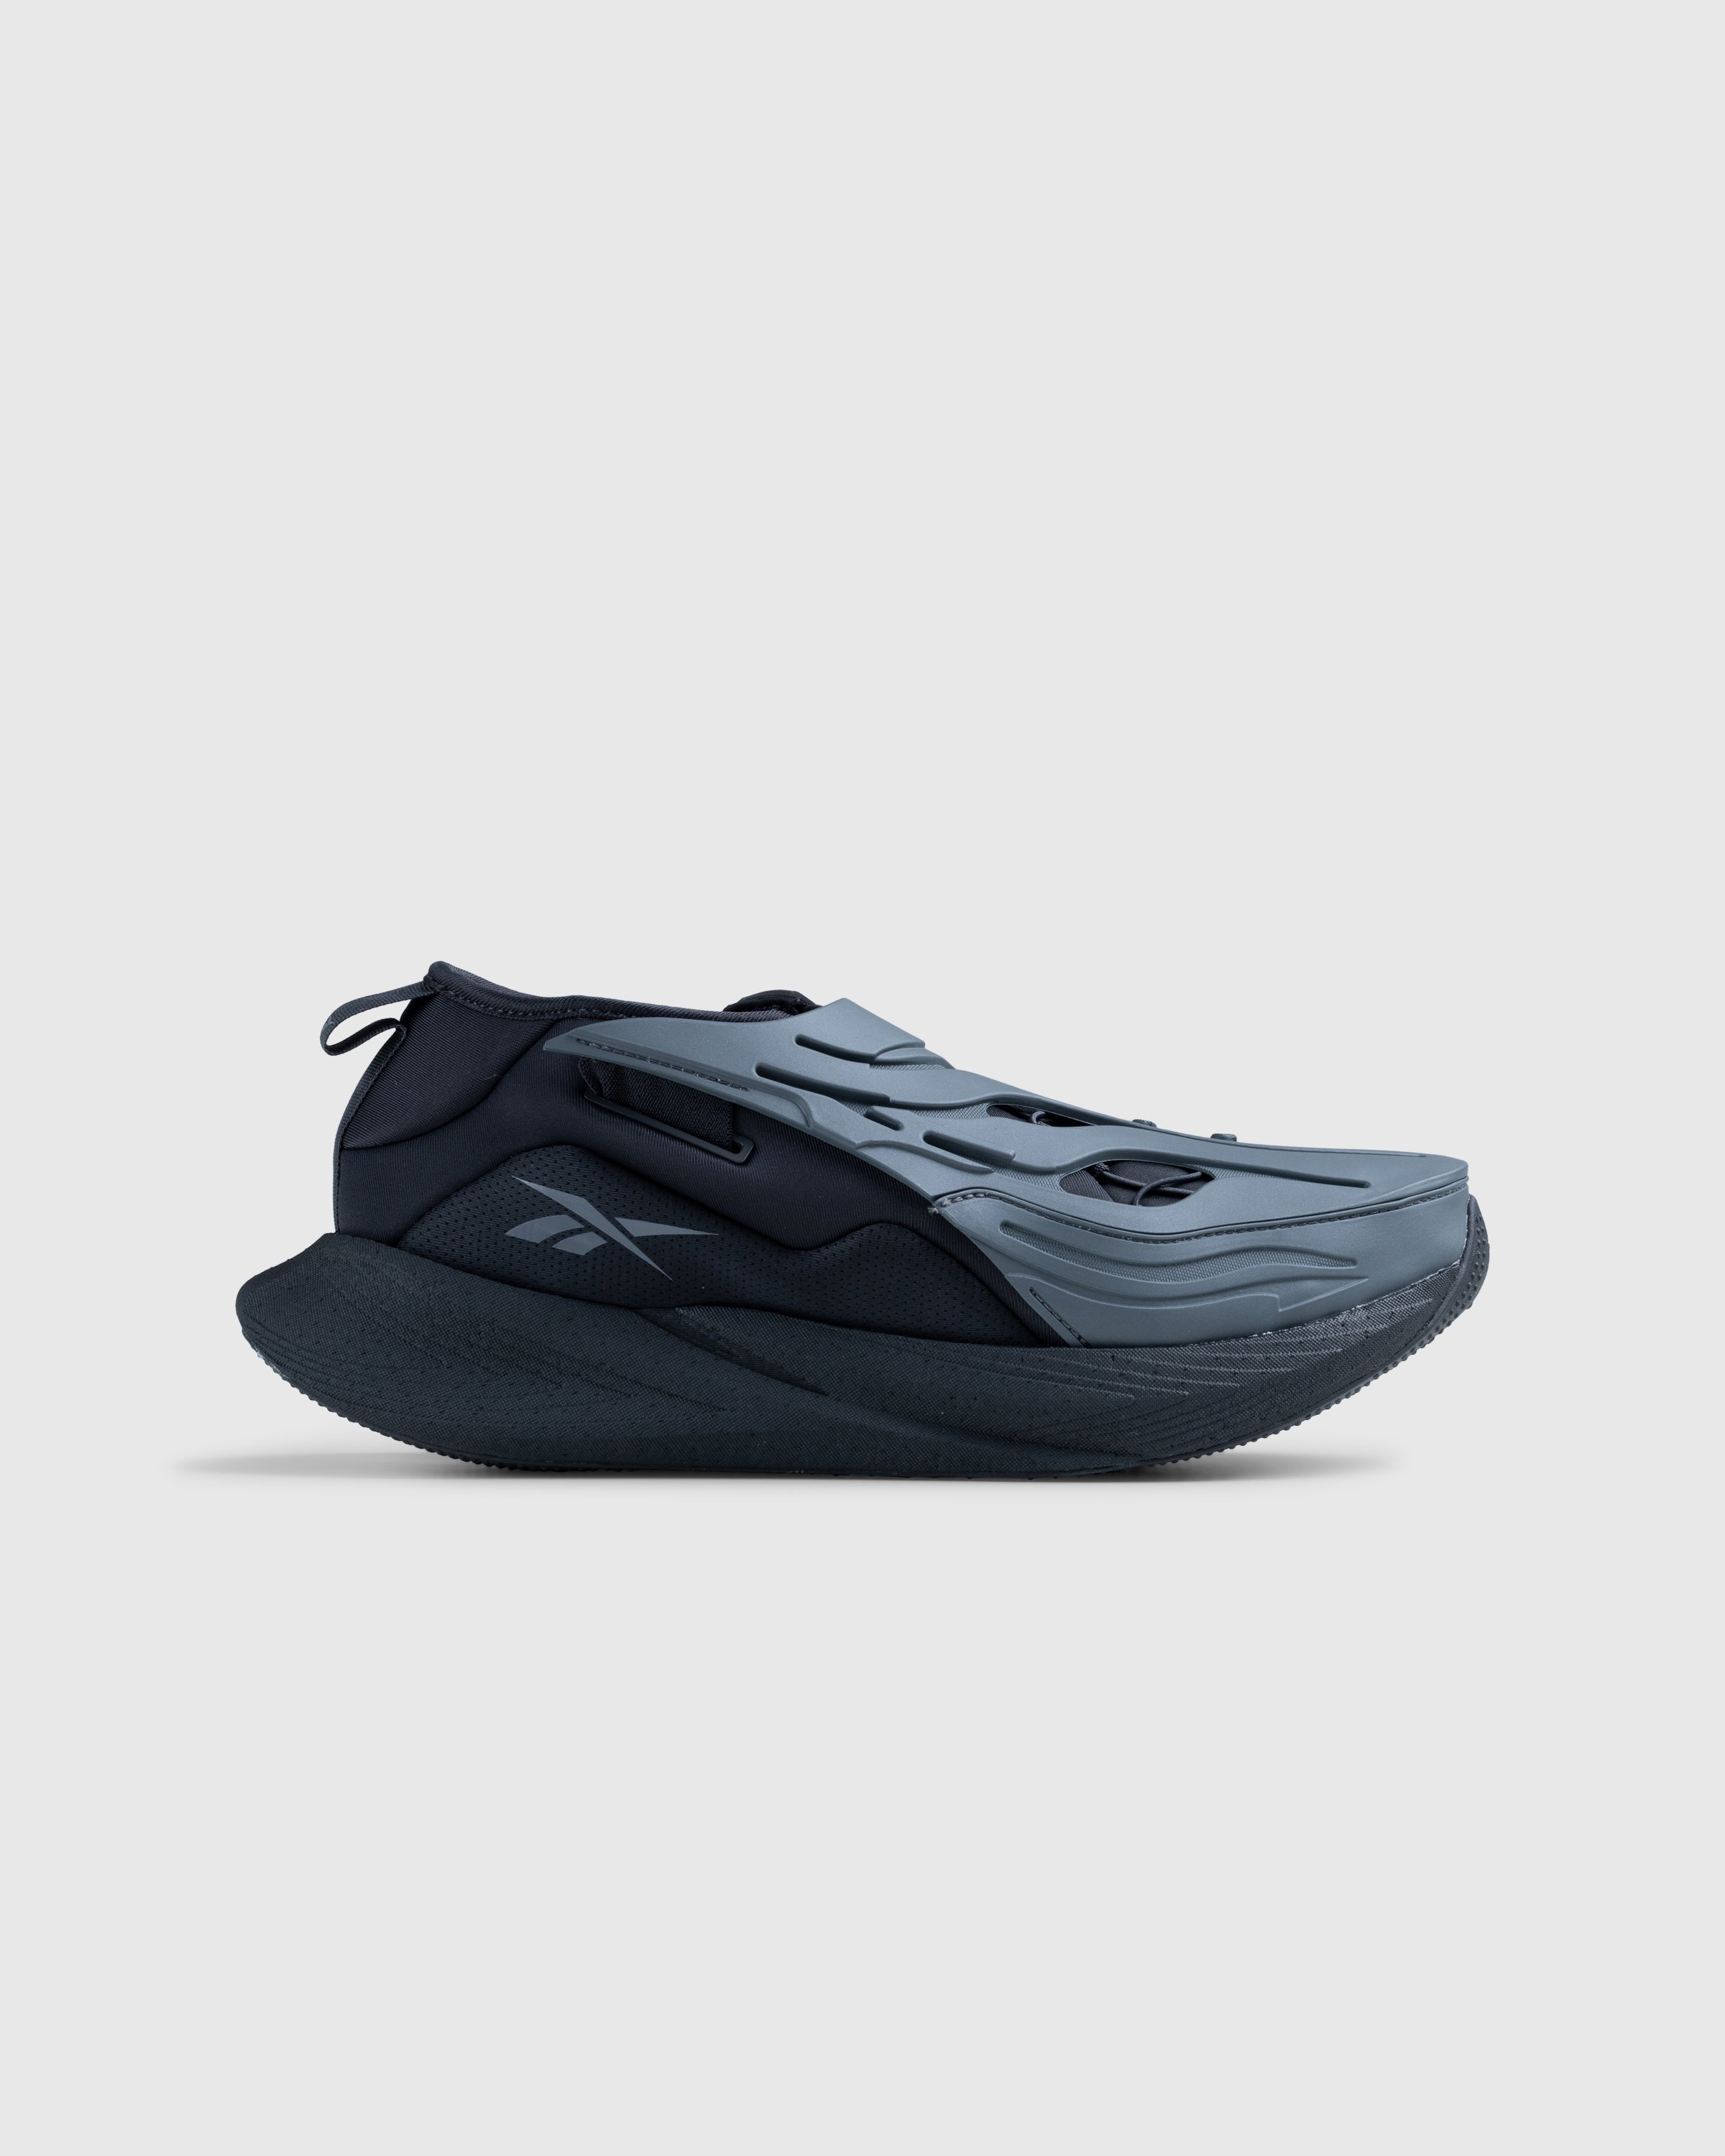 Reebok - FLOATRIDE BLACK/SILVER - Footwear - Black - Image 1